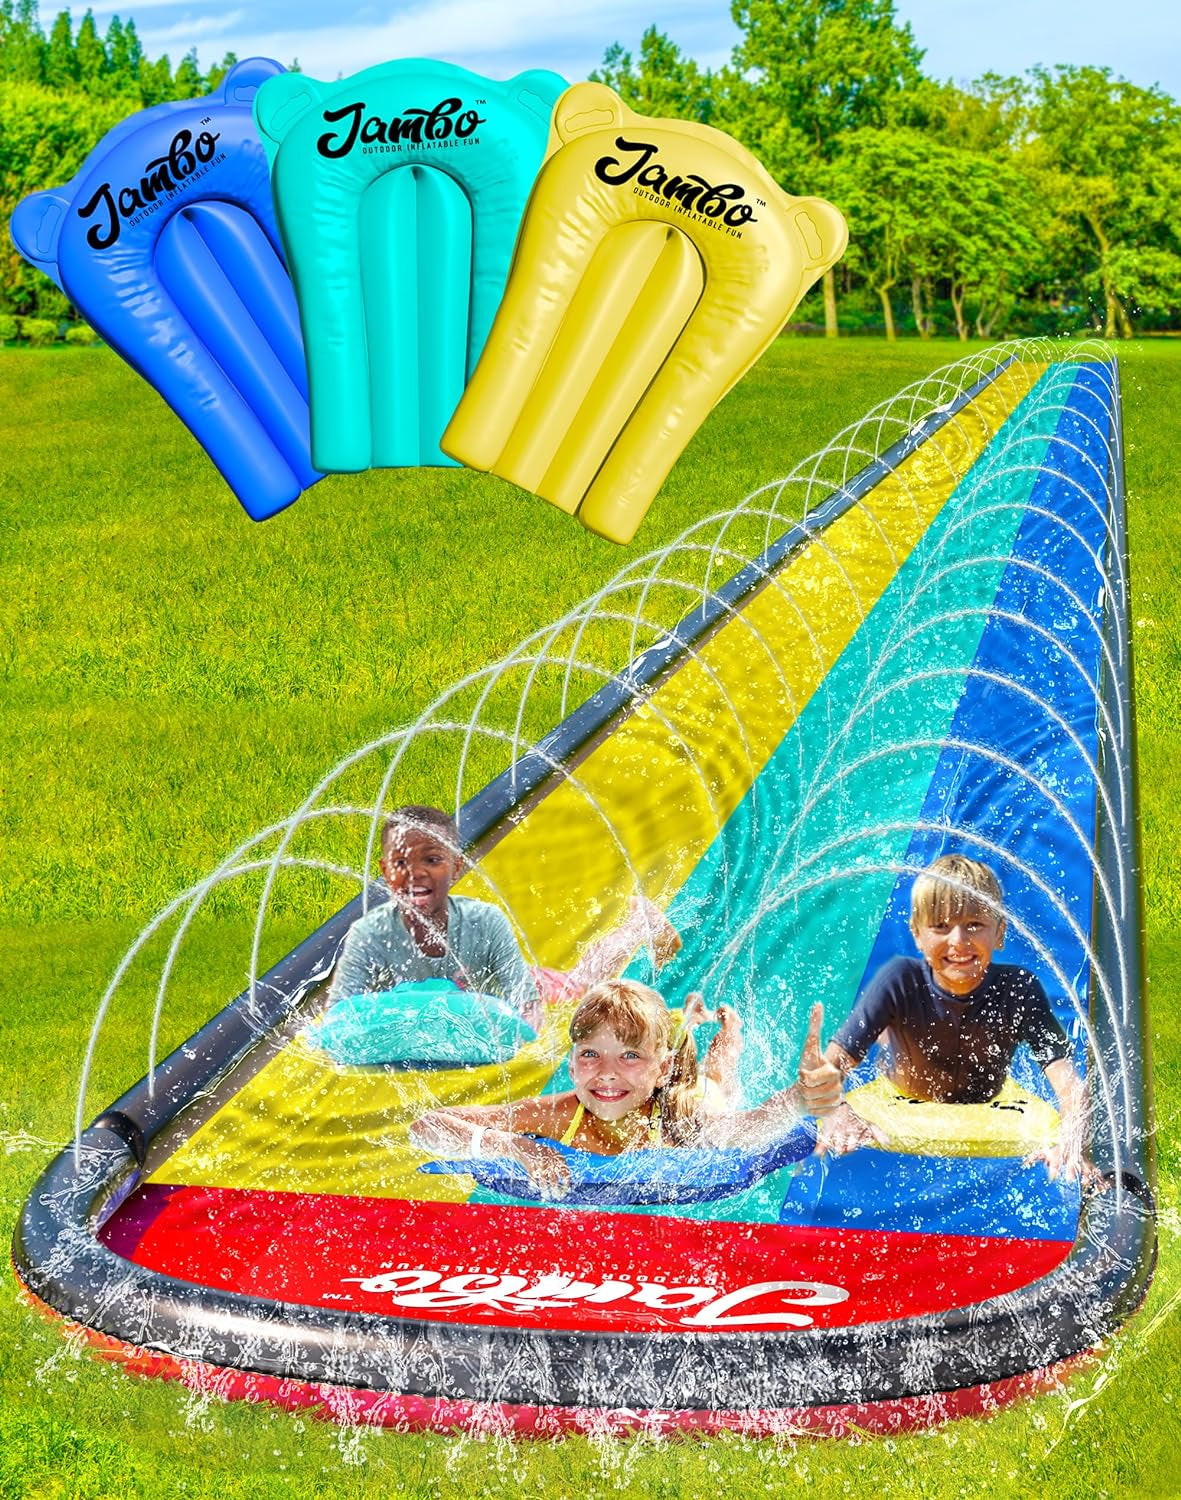 XL Premium Slip Splash and Slide with 3 Bodyboards, Heavy Duty Water Slide with Advanced 3-Way Water Sprinkler System, Backyard Waterslide Outdoor Water Toys N Slides for Kids, Splash Pad